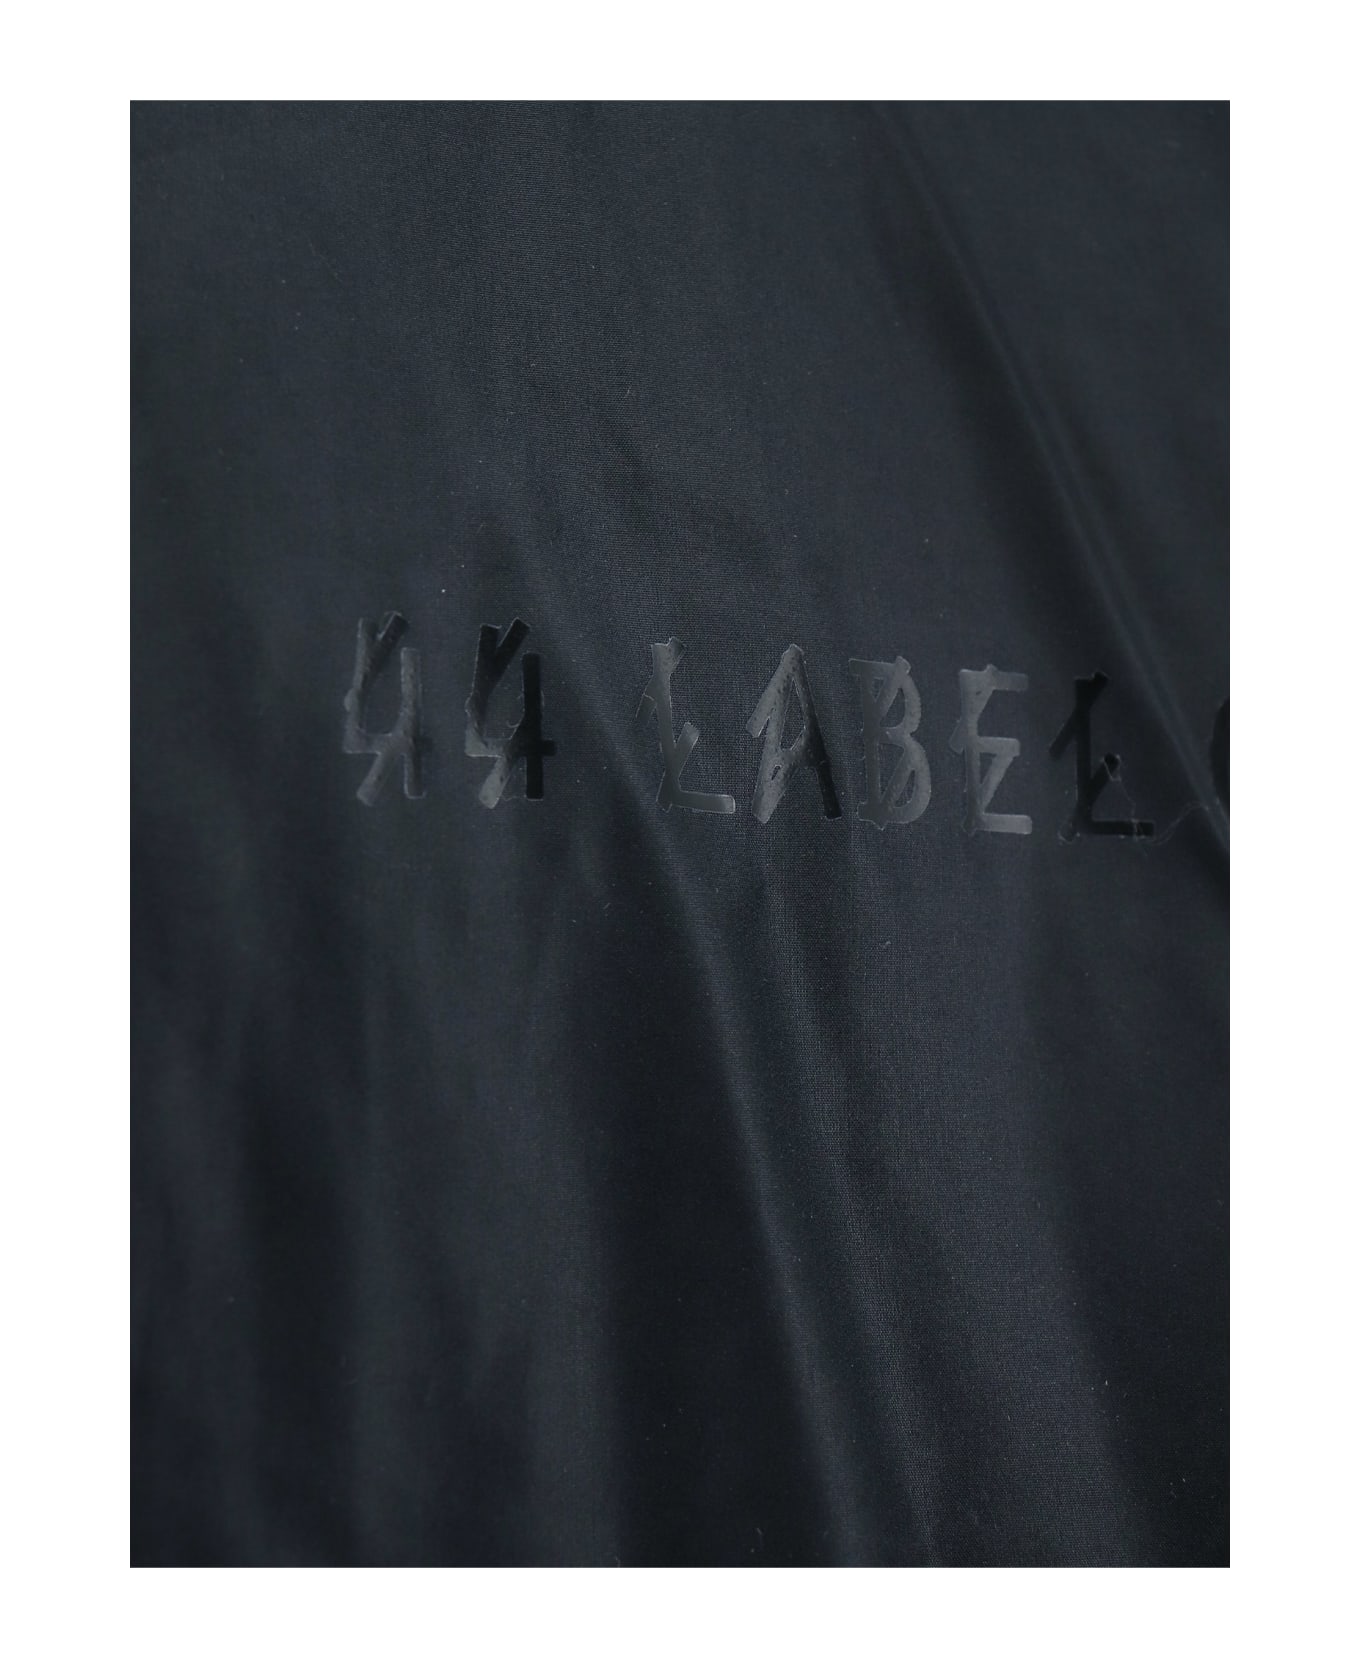 44 Label Group Jacket Jacket - BLACK